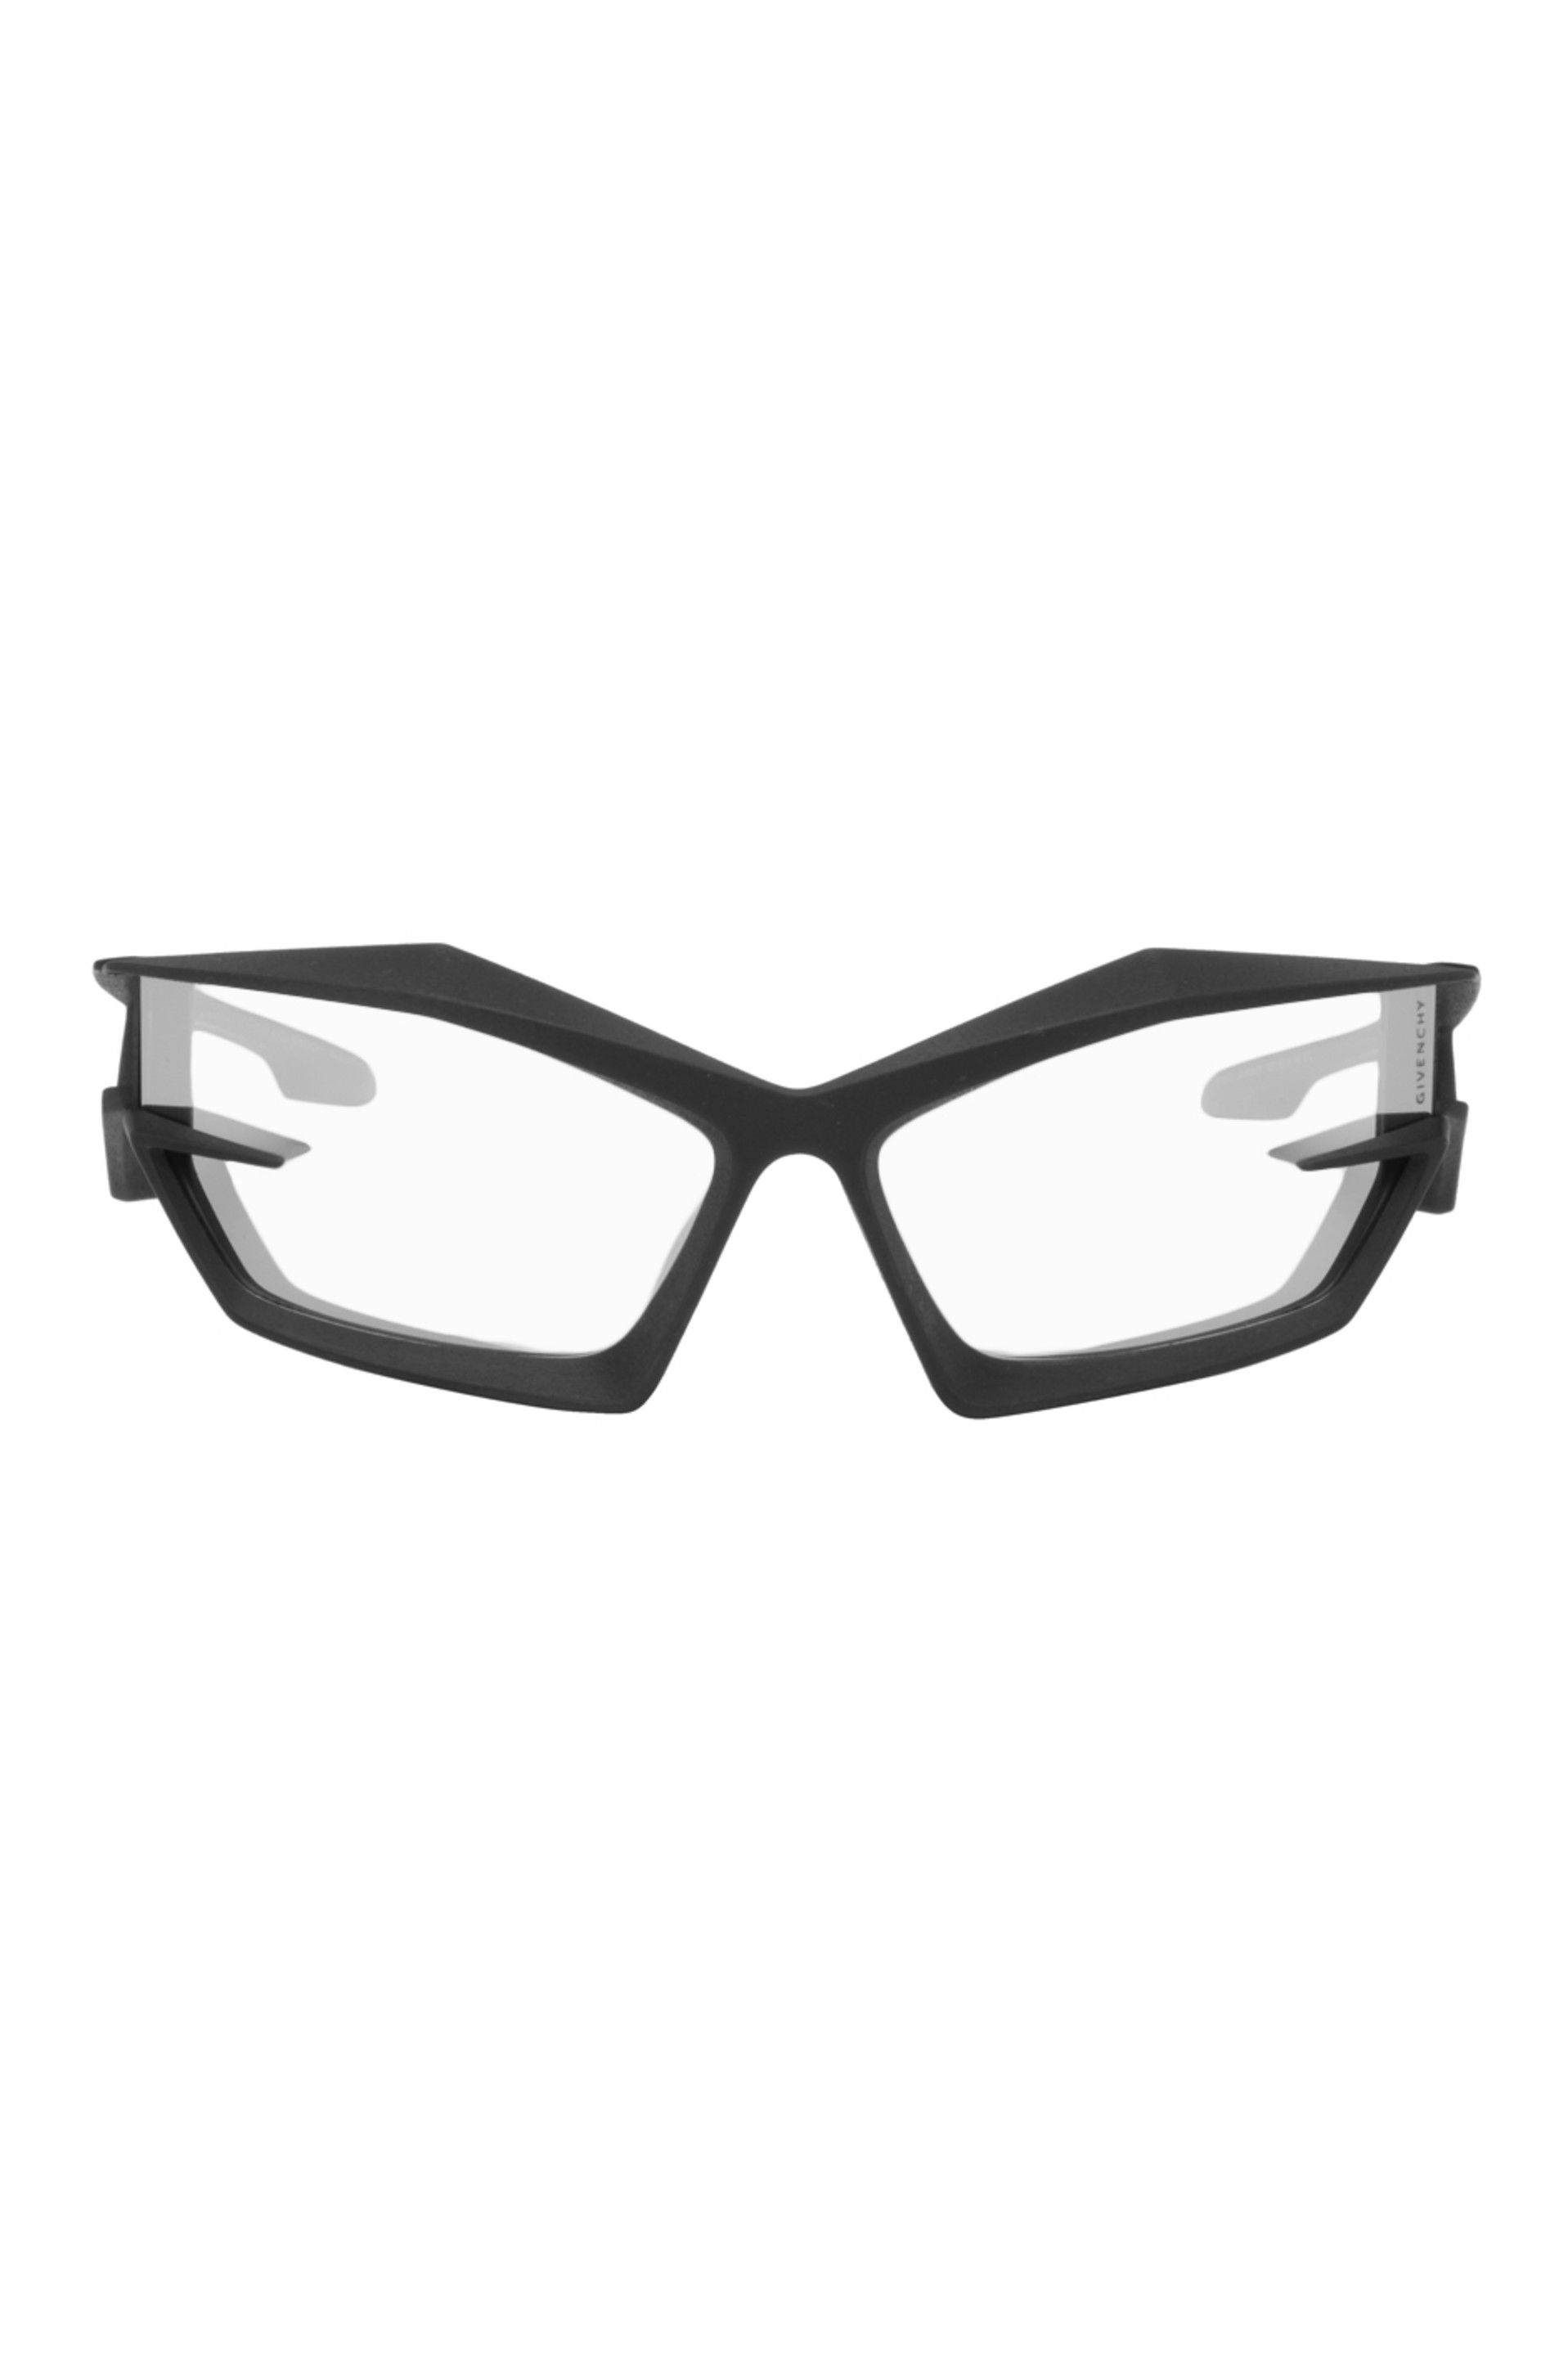 Givenchy - Black 3D Giv Cut Sunglasses | SSENSE